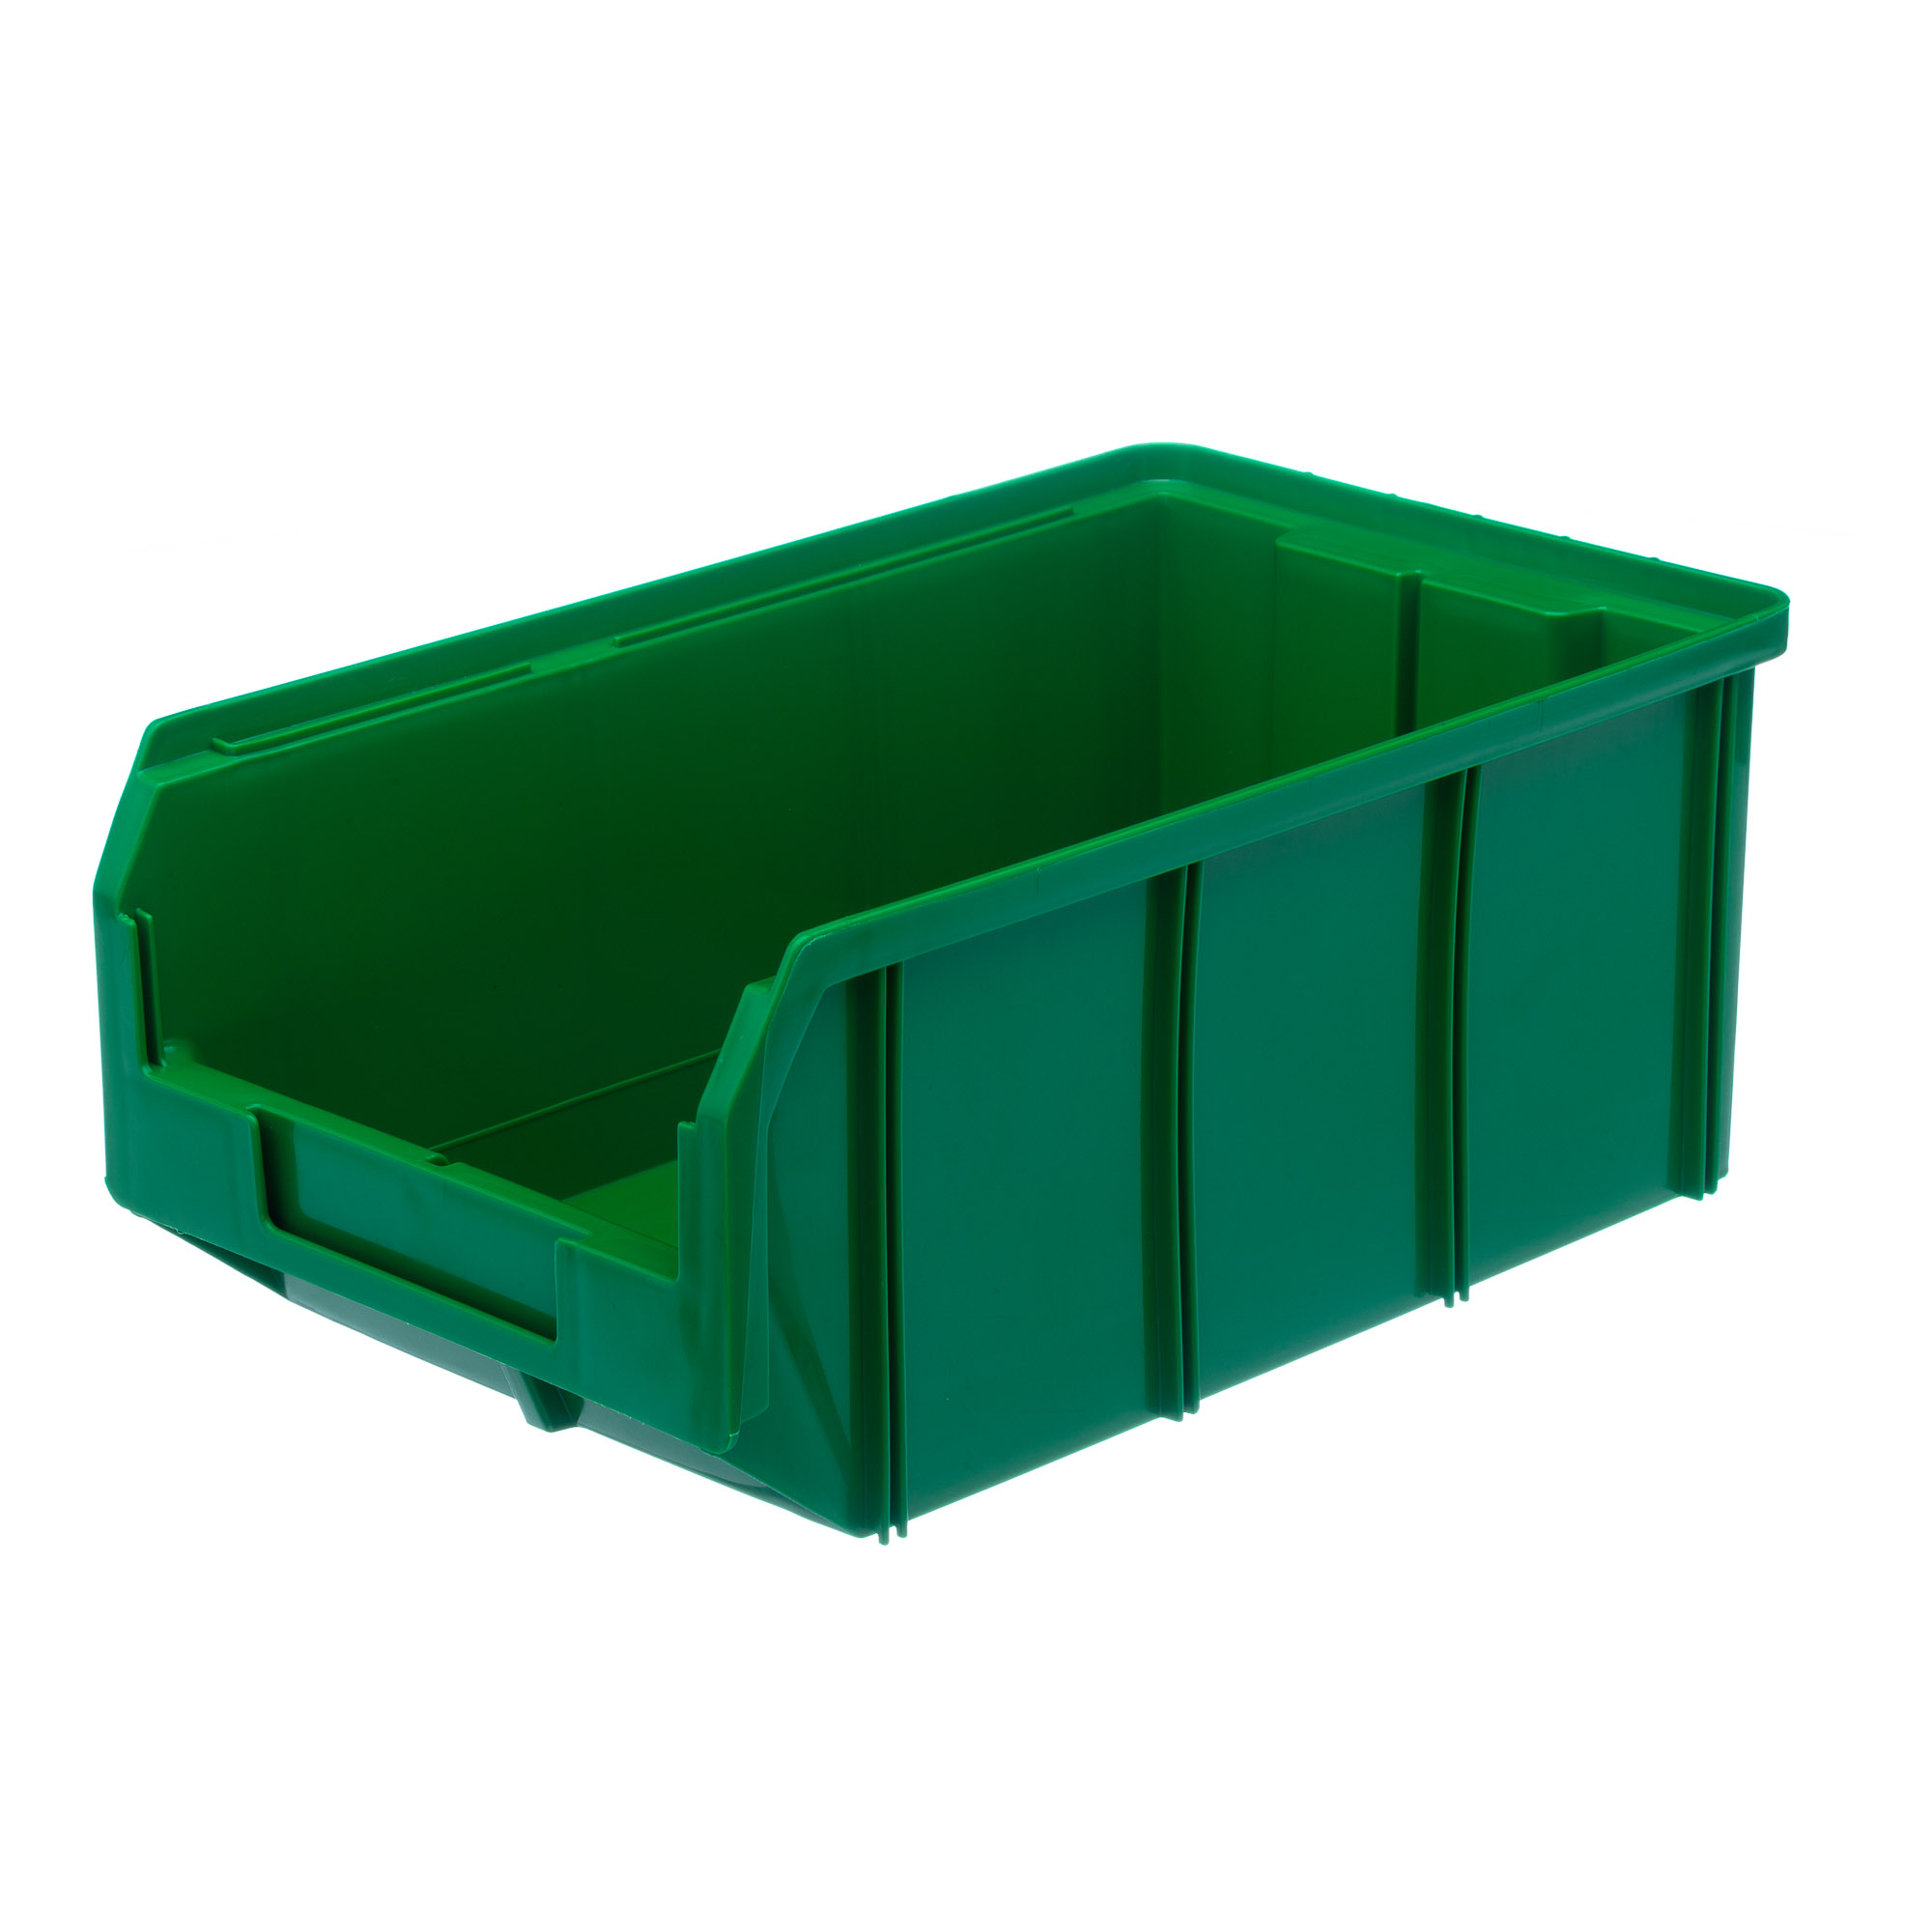 Пластиковый ящик Стелла-техник V-3-зеленый 342х207x143мм, 9,4 литра пластиковый короб стелла техник с 2 зеленый прозрачный 140х250х100мм